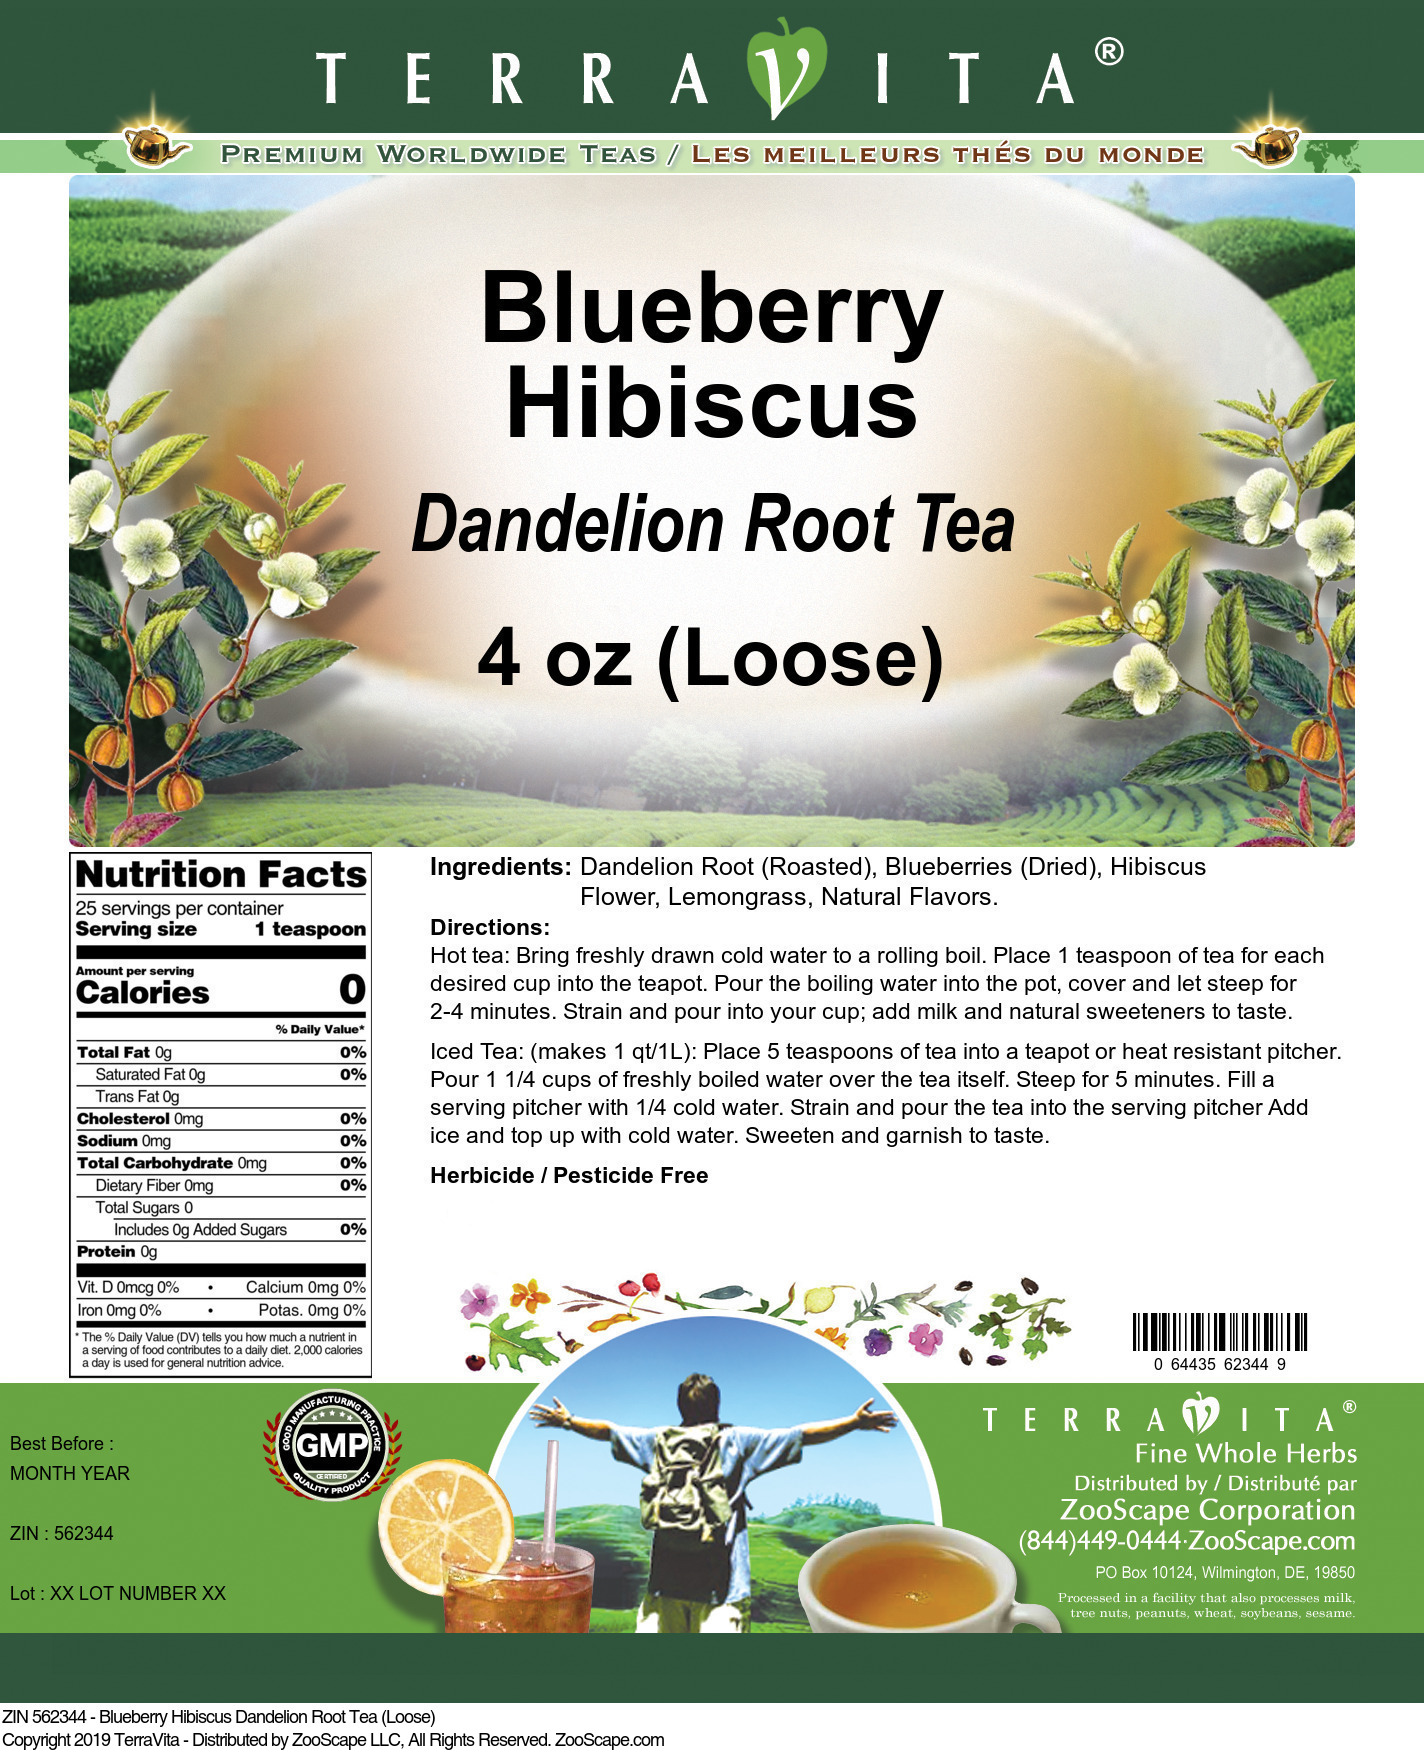 Blueberry Hibiscus Dandelion Root Tea (Loose) - Label